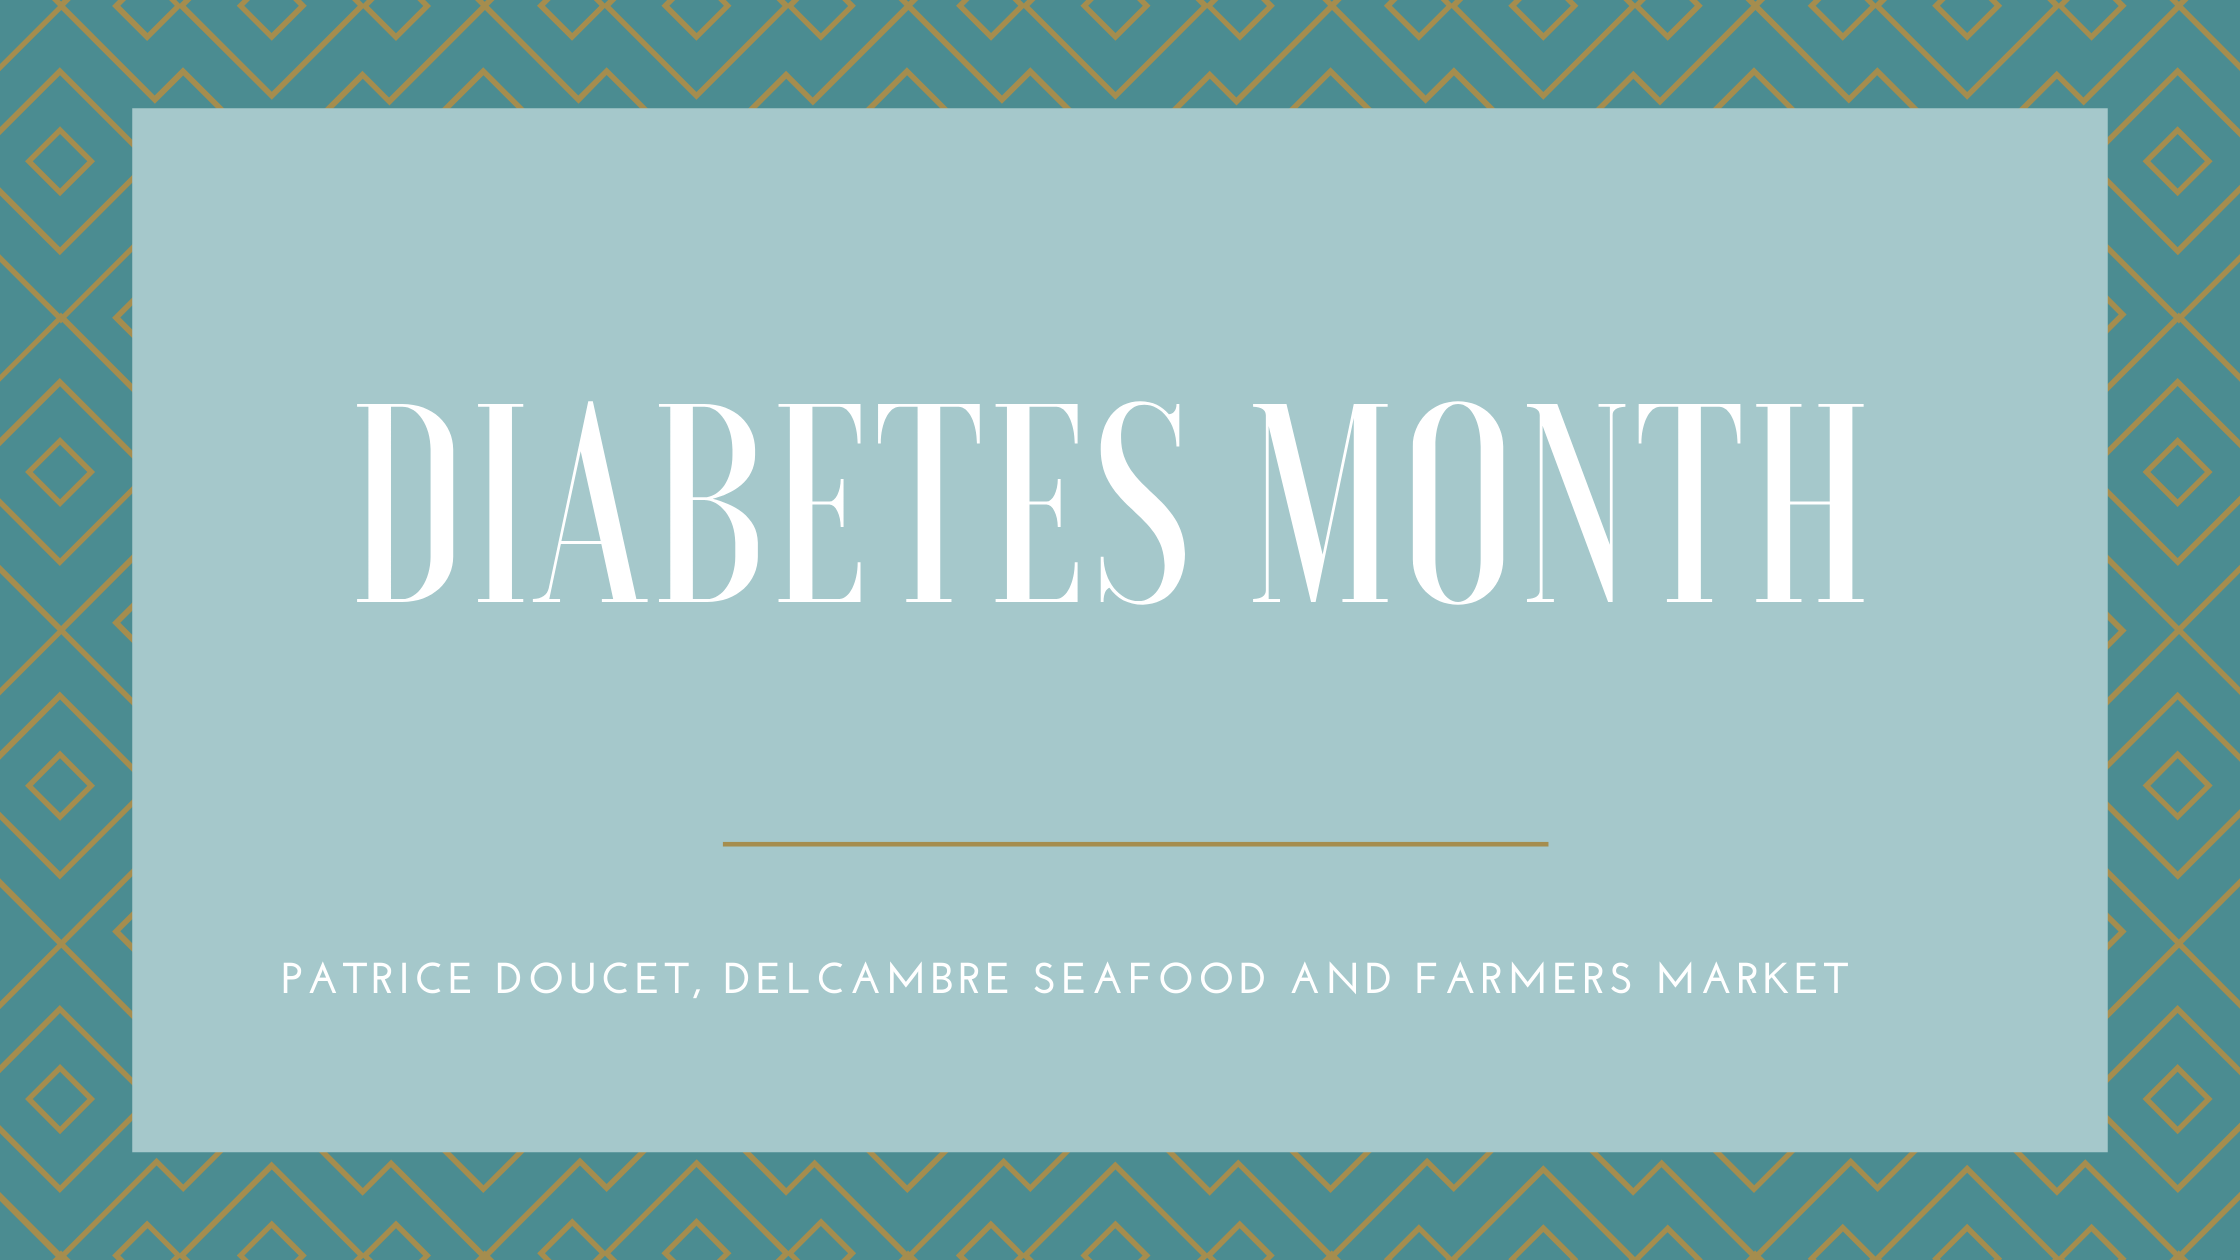 November is Diabetes Month